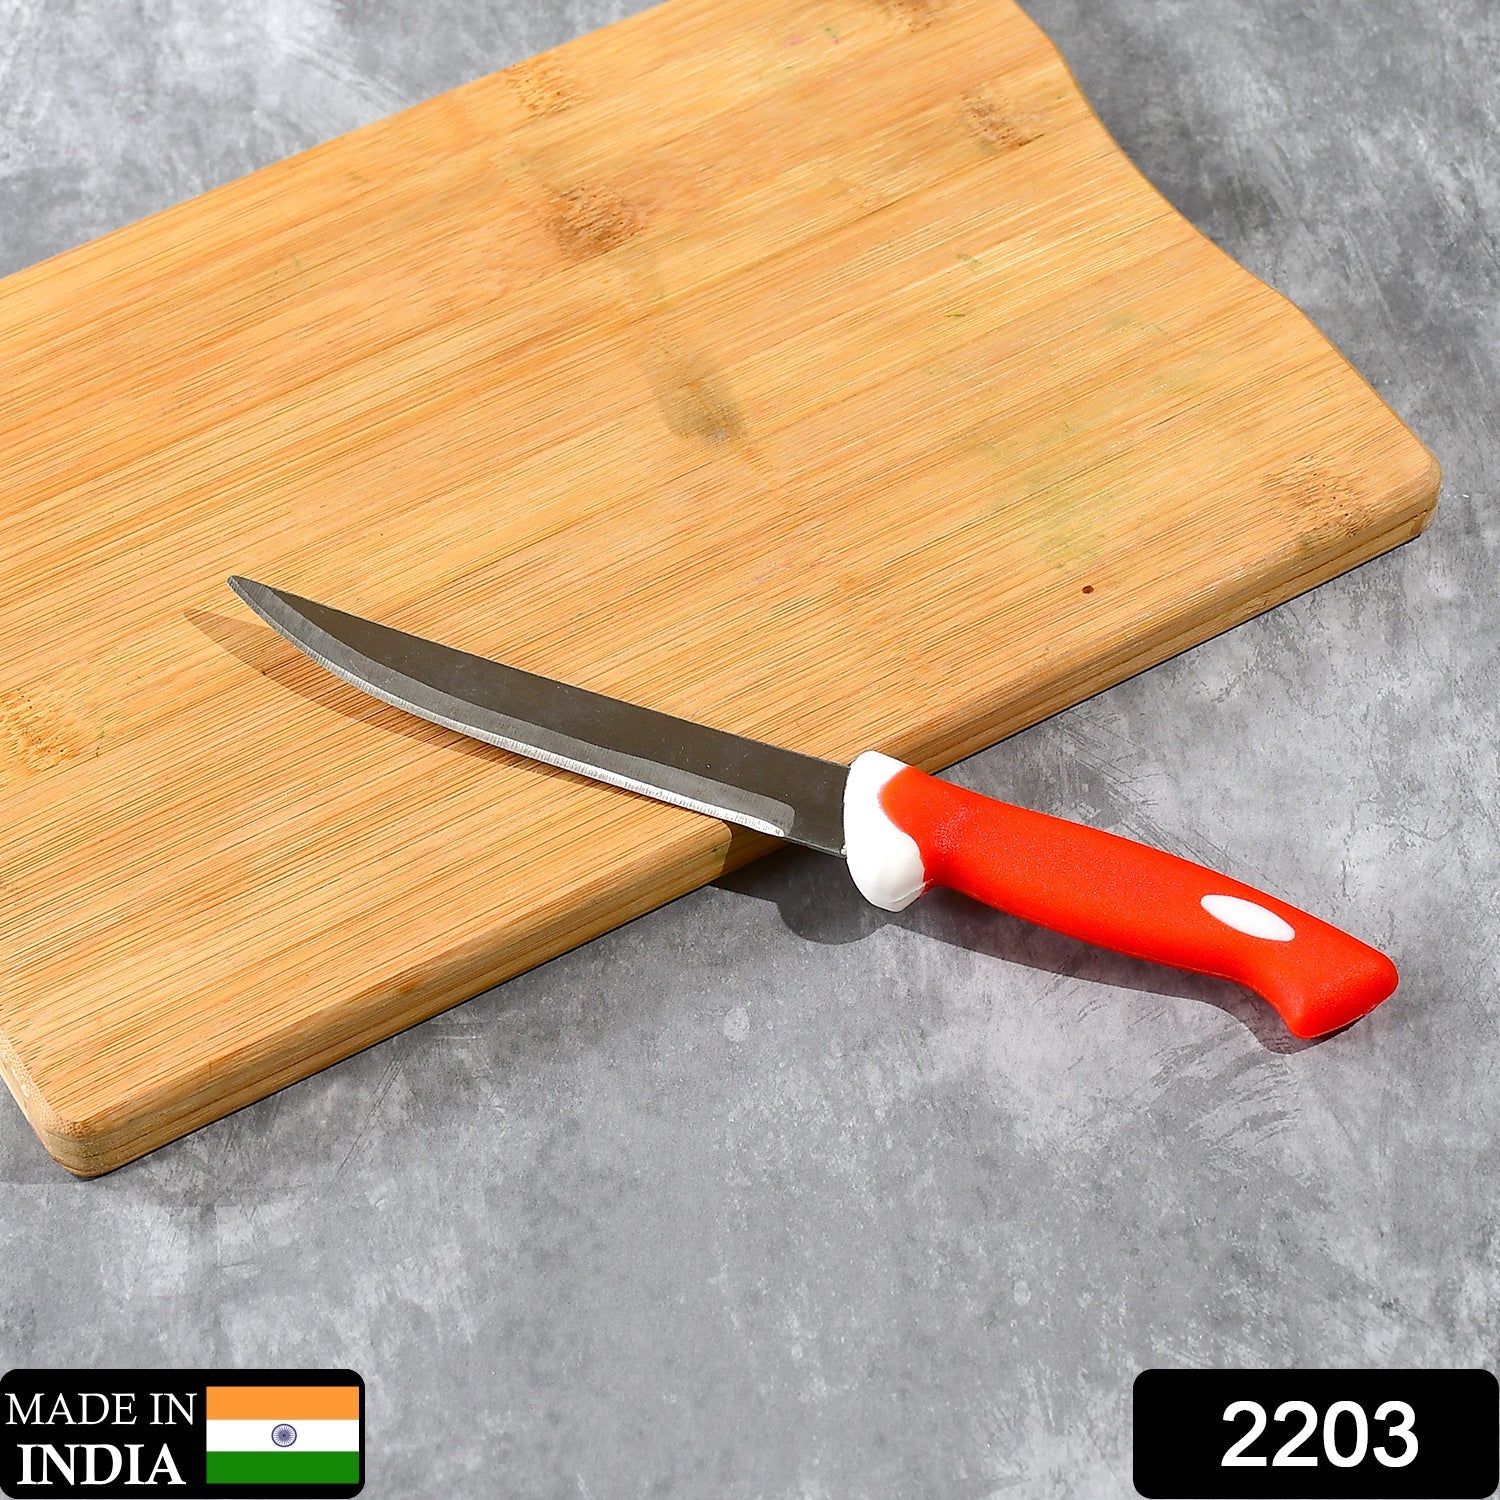 2203 Stainless Steel Fruit and Vegetable Sharp Knife DeoDap